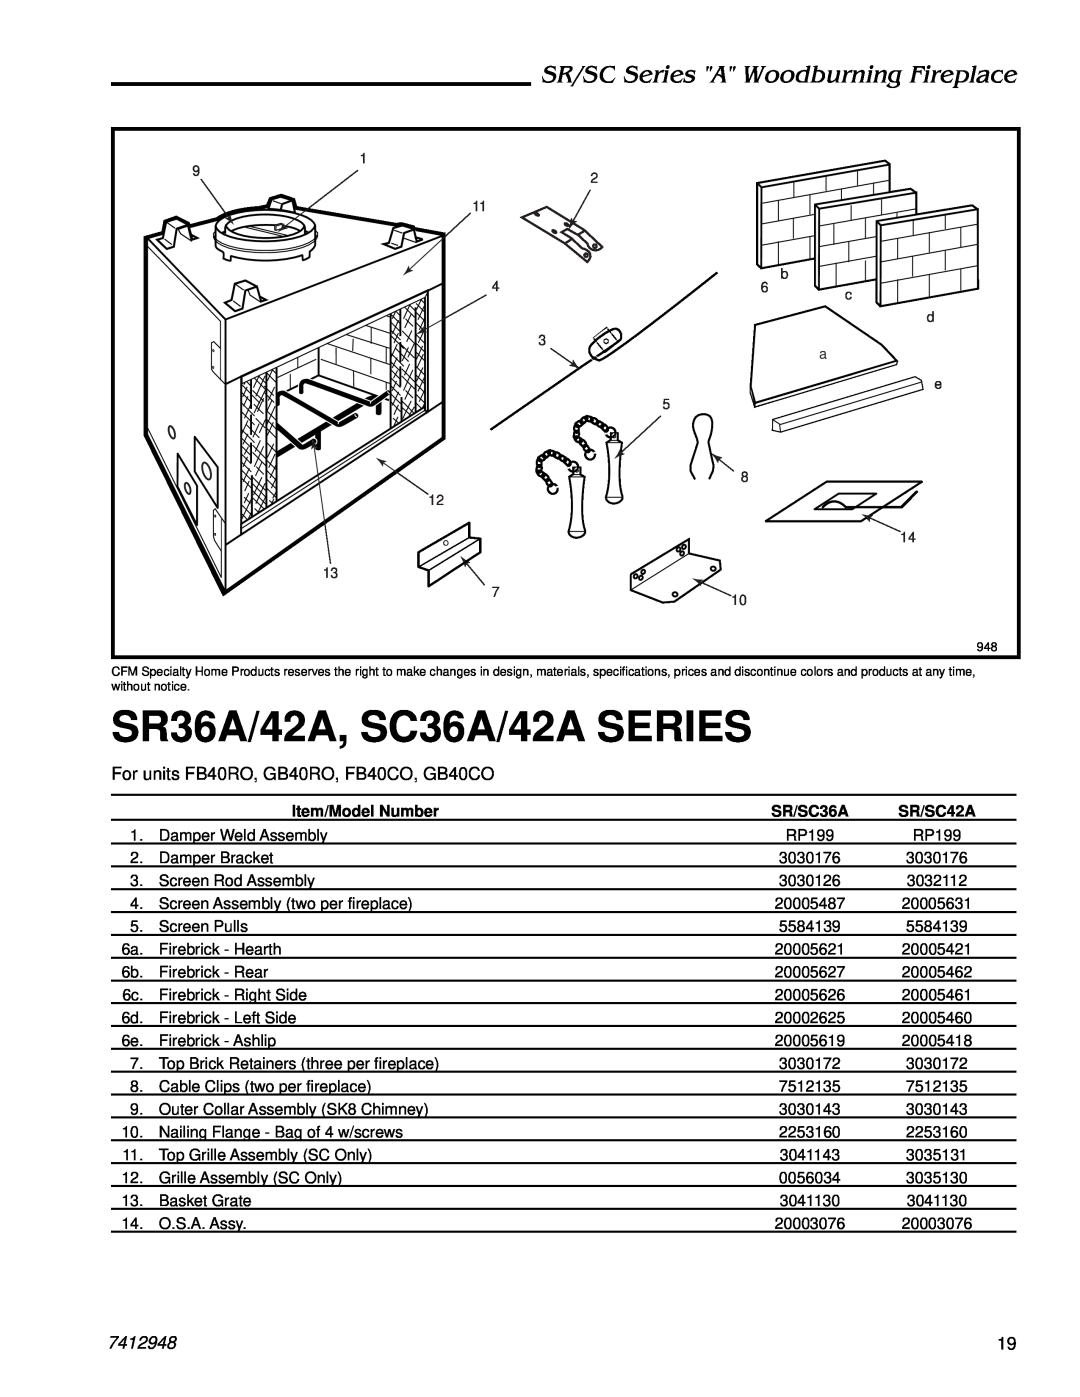 Majestic Appliances SC42A, SR42A manual SR36A/42A, SC36A/42A SERIES, SR/SC Series A Woodburning Fireplace, 7412948 